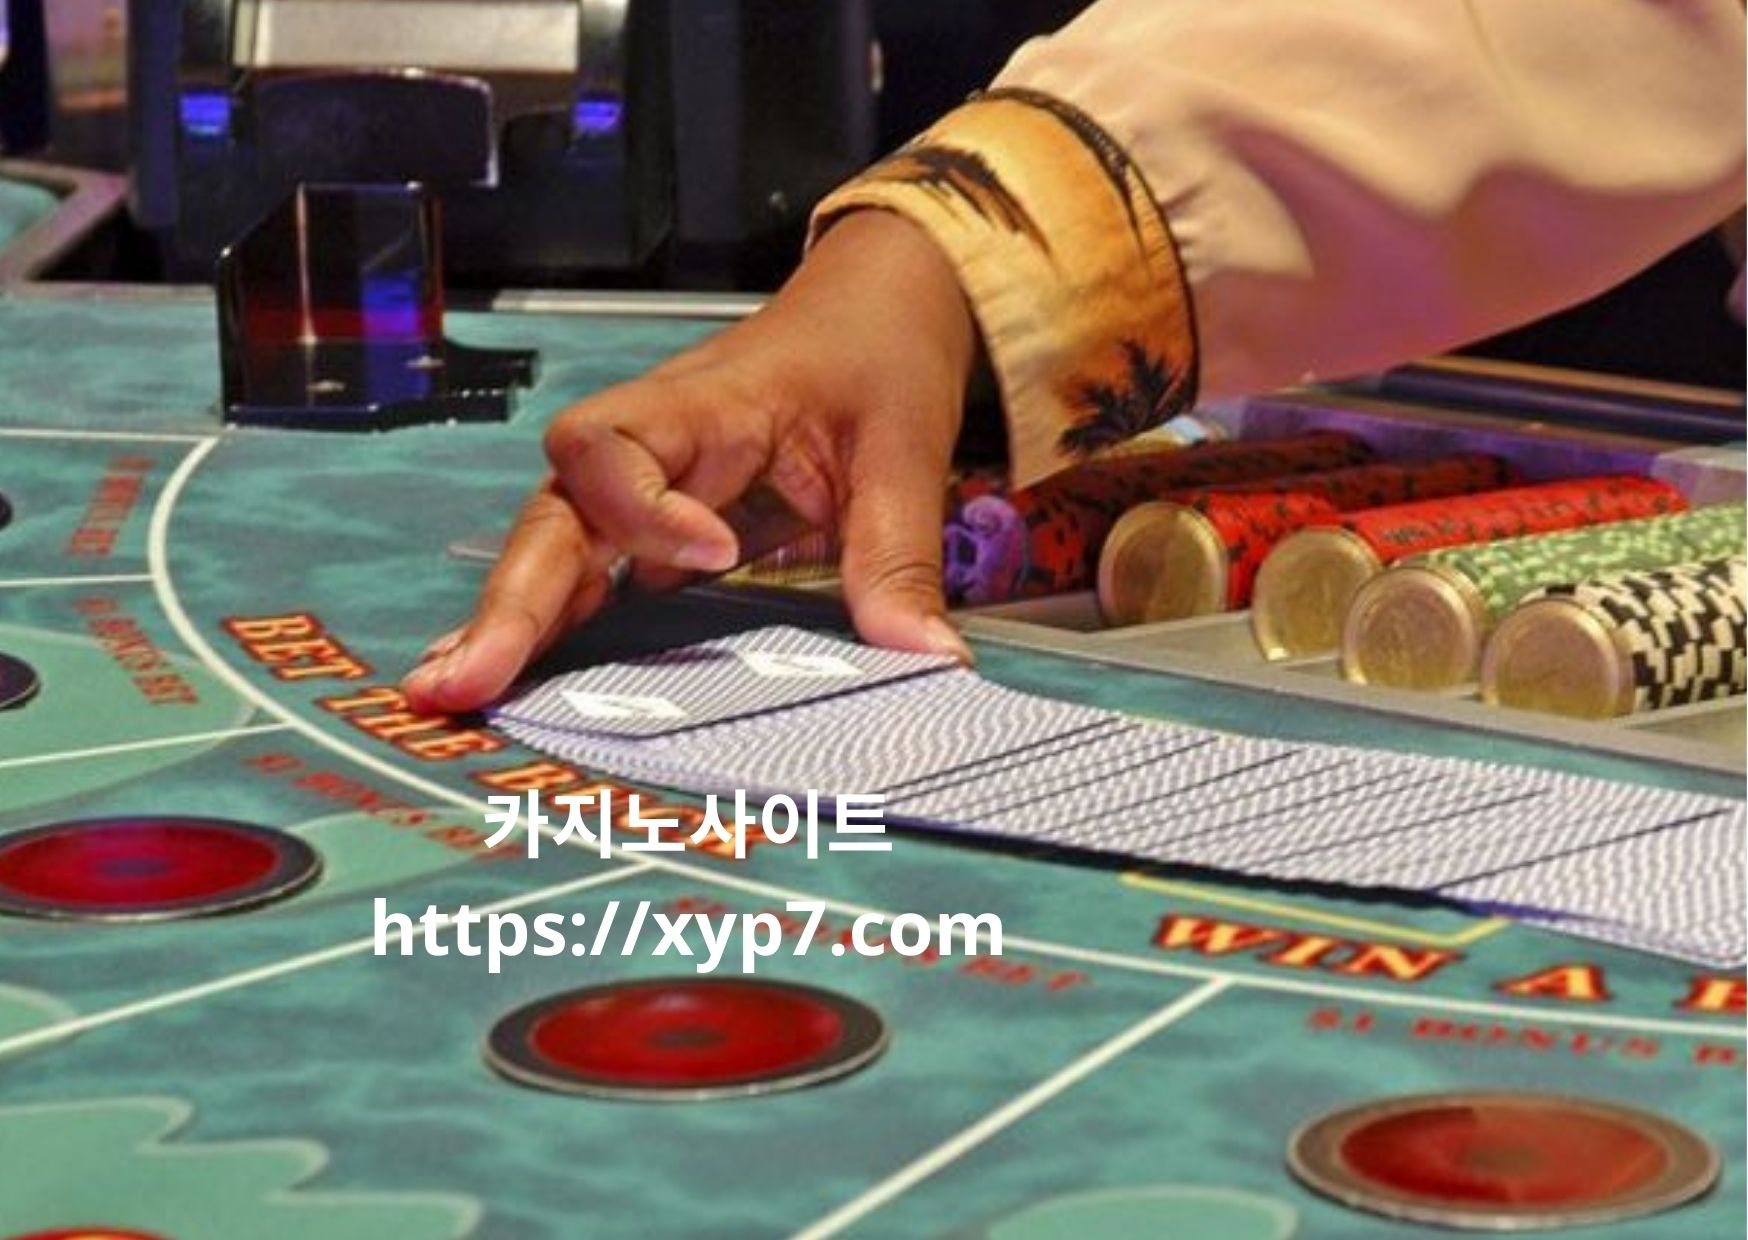 Strike closes Emontreal casino dealer poker room